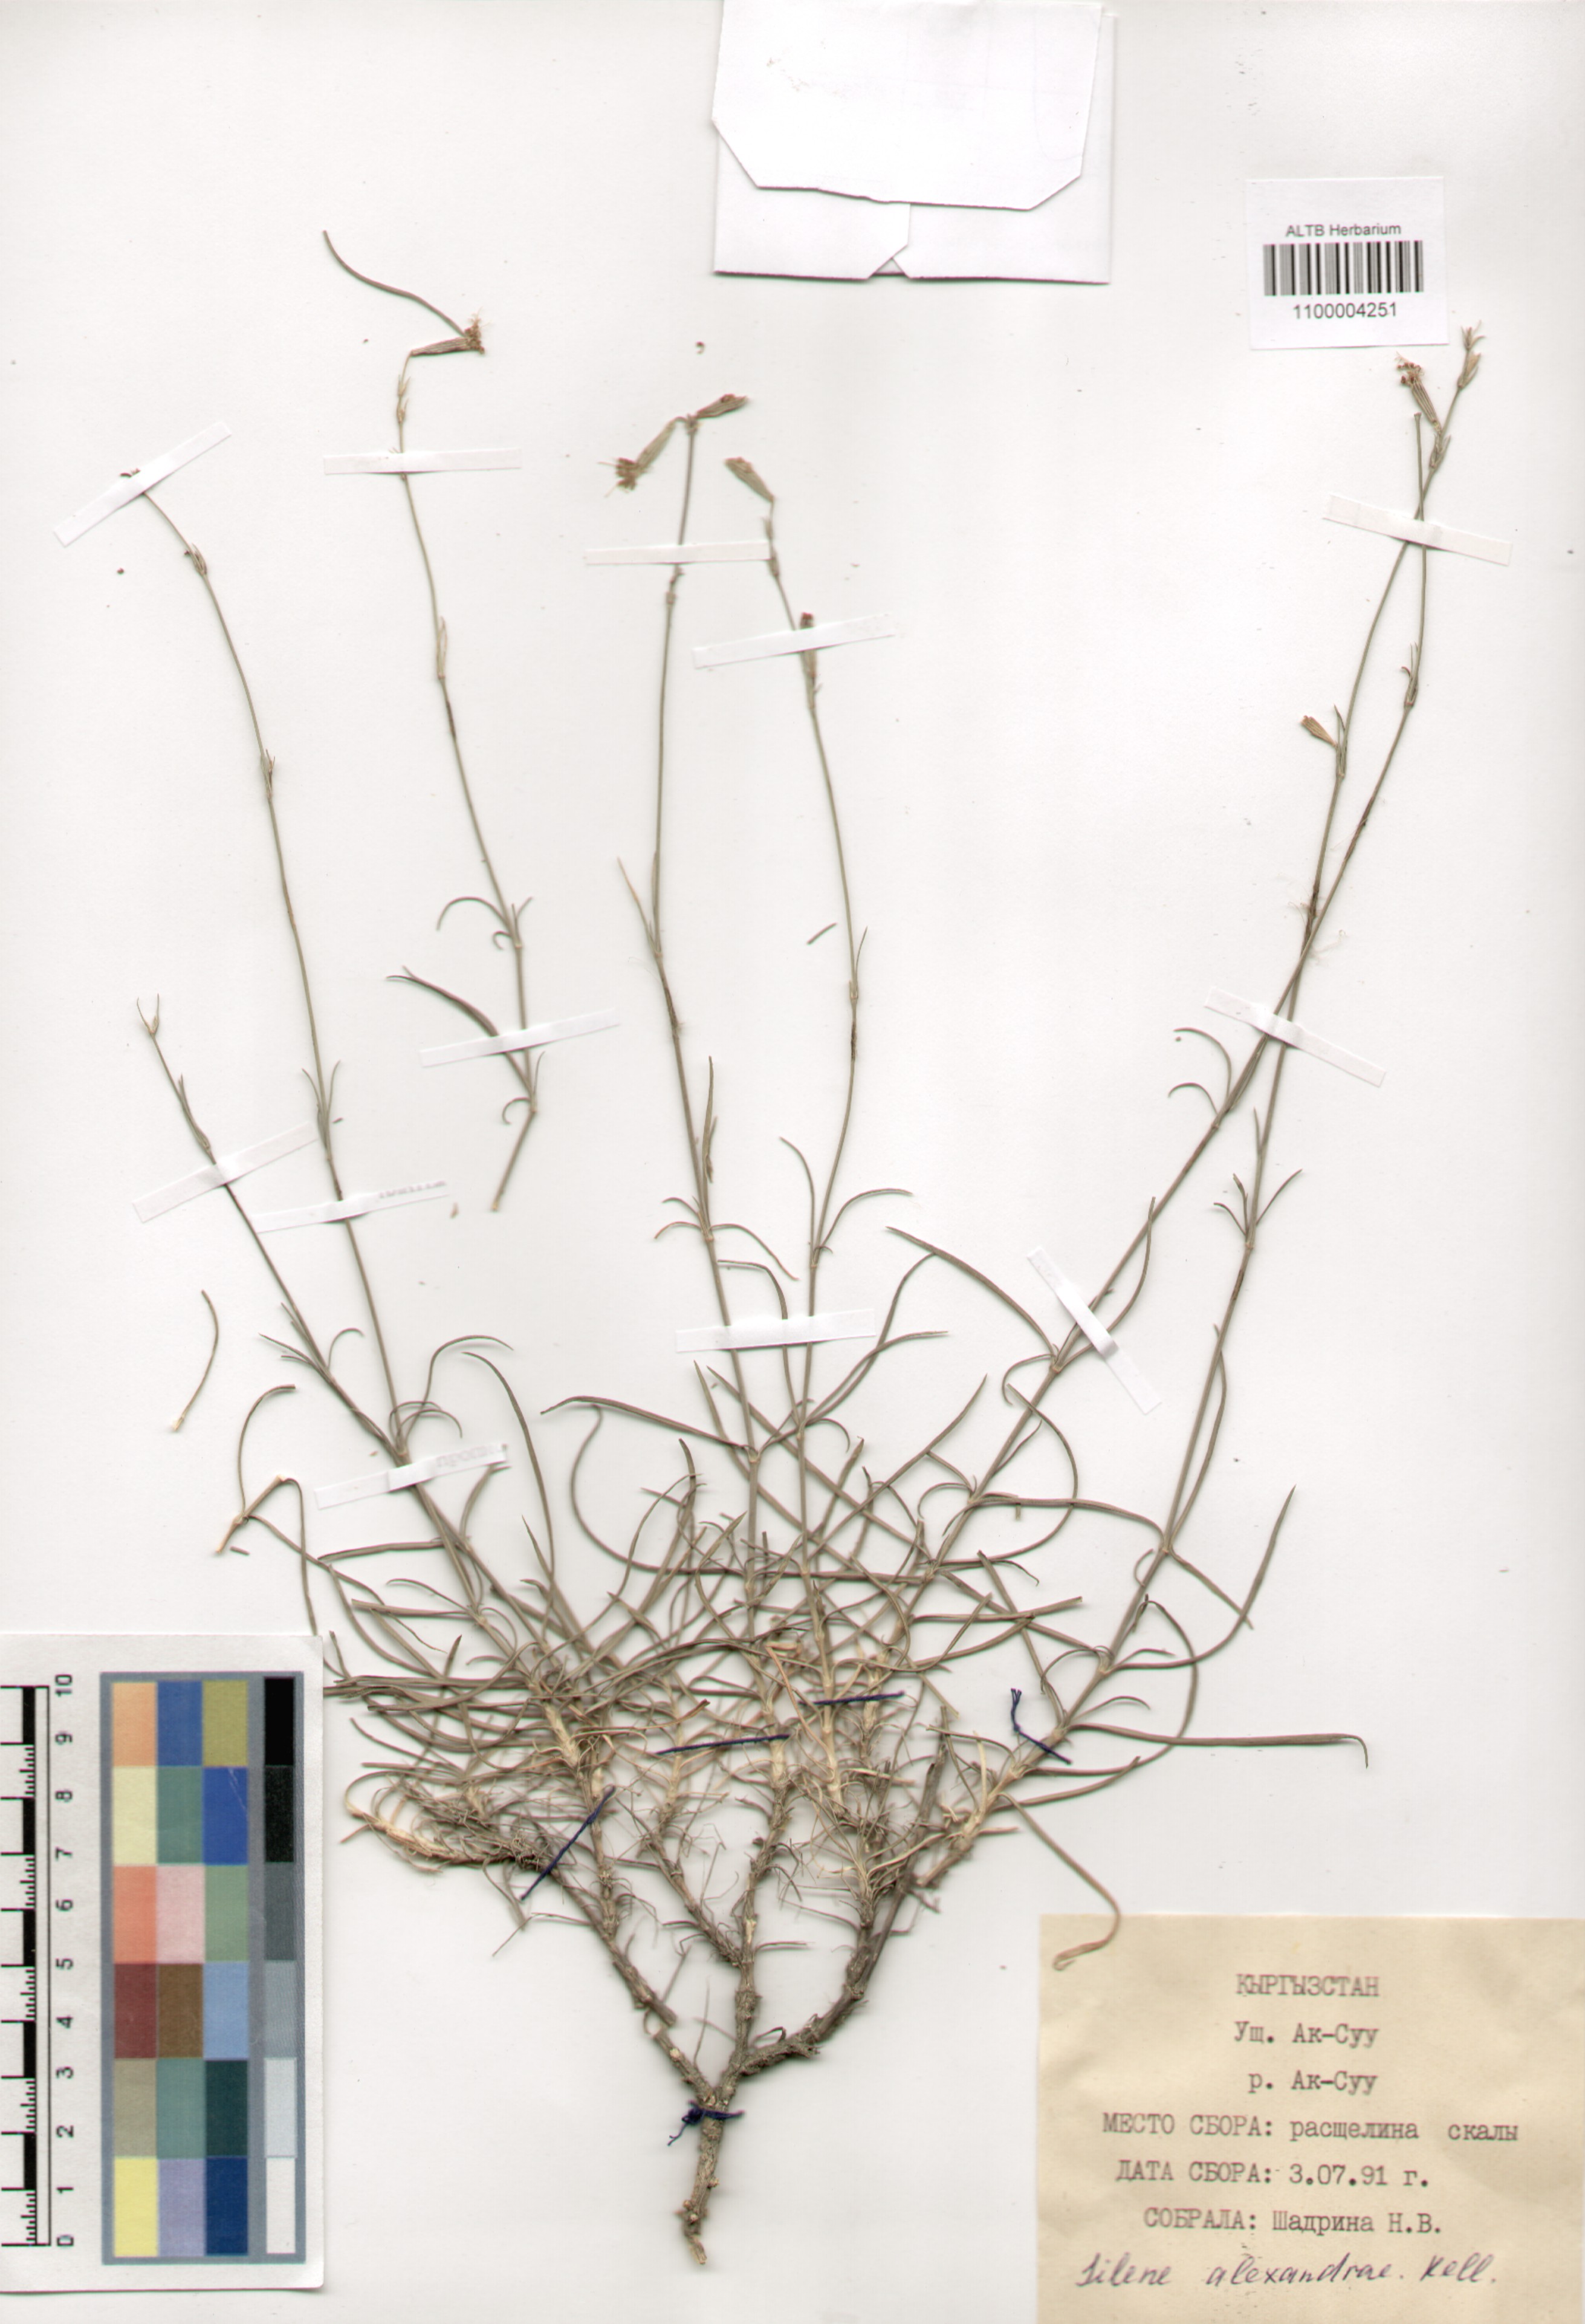 Caryophyllaceae,Silene alexandrae Kell.